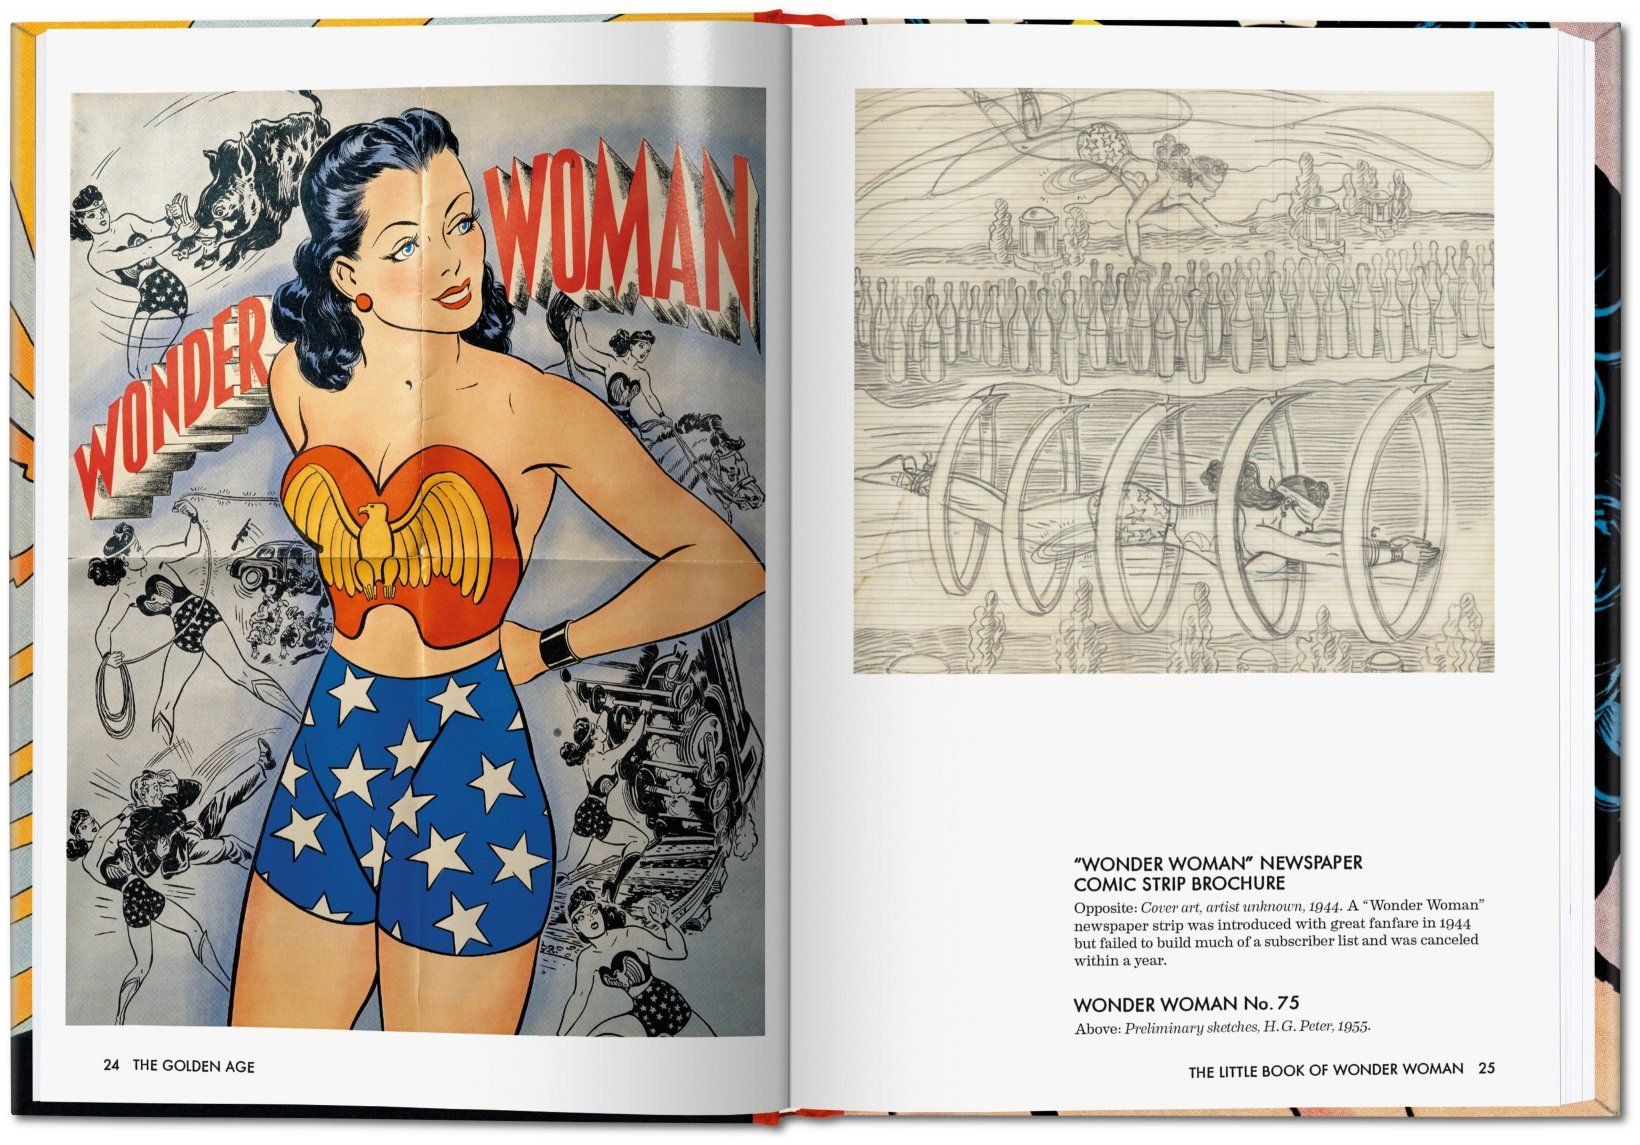 Levitz's Little Book of Wonder Woman, published by Taschen